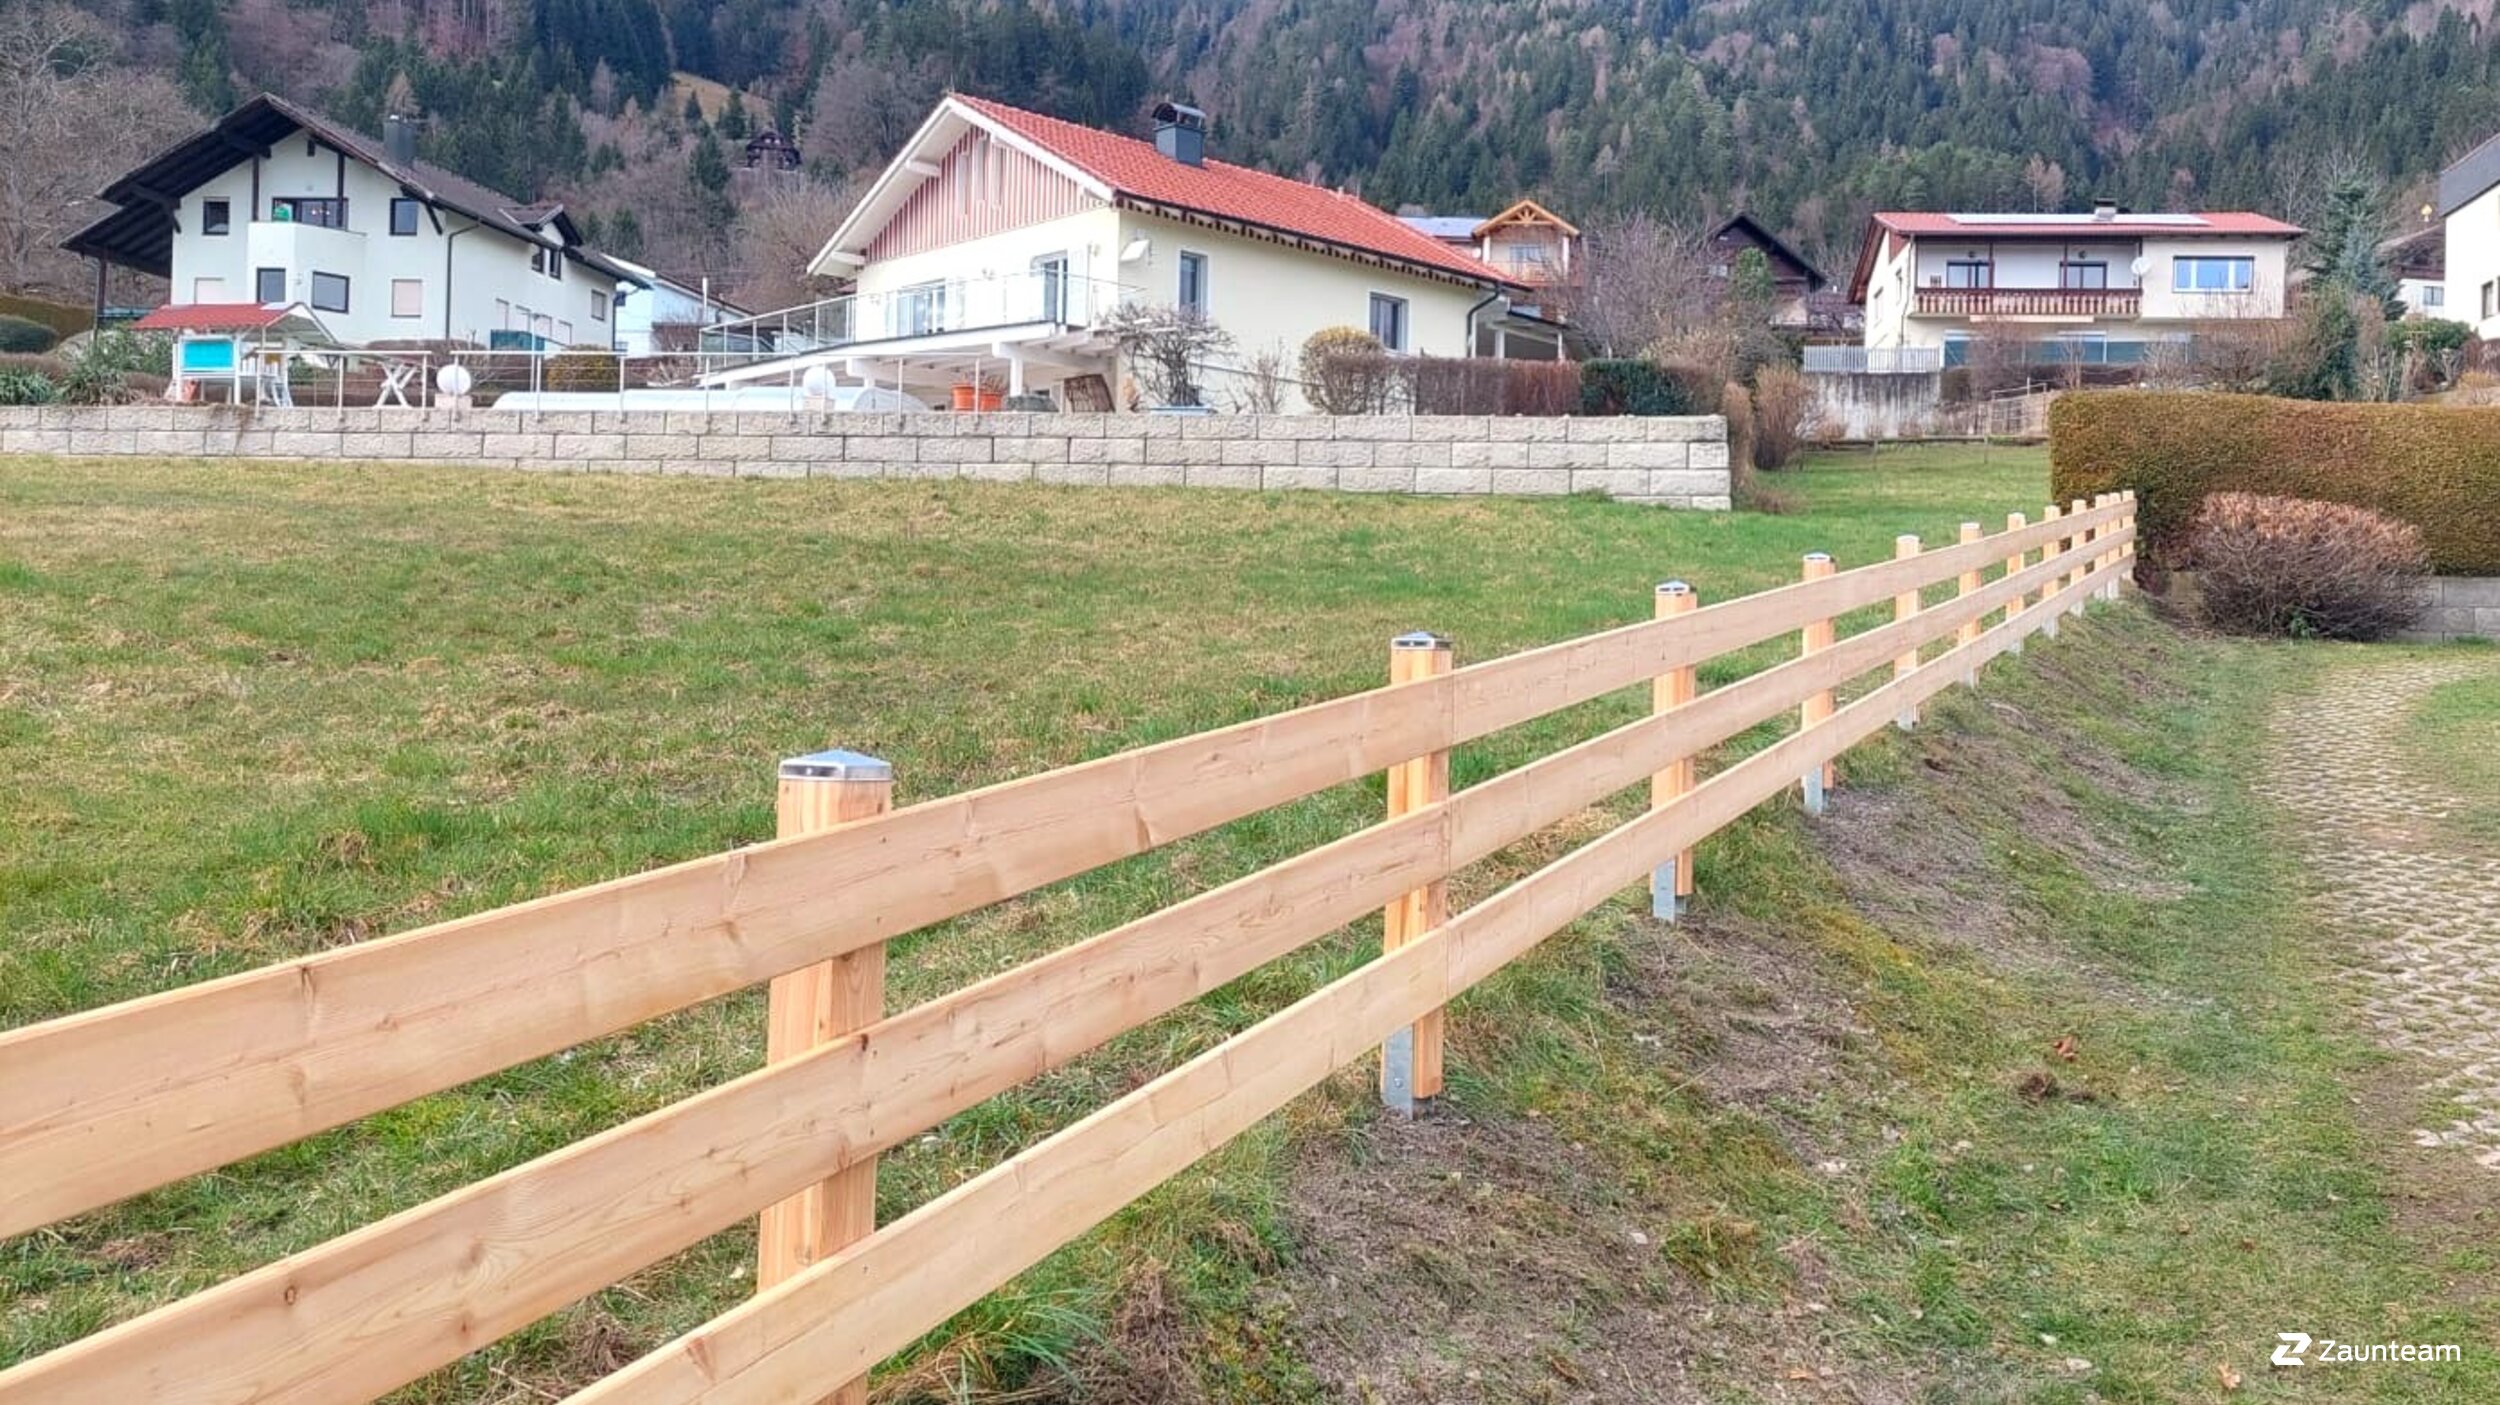 Clôture ranch de 2024 à 9551 Bodensdorf Autriche de Zaunteam Kärnten-Ost.